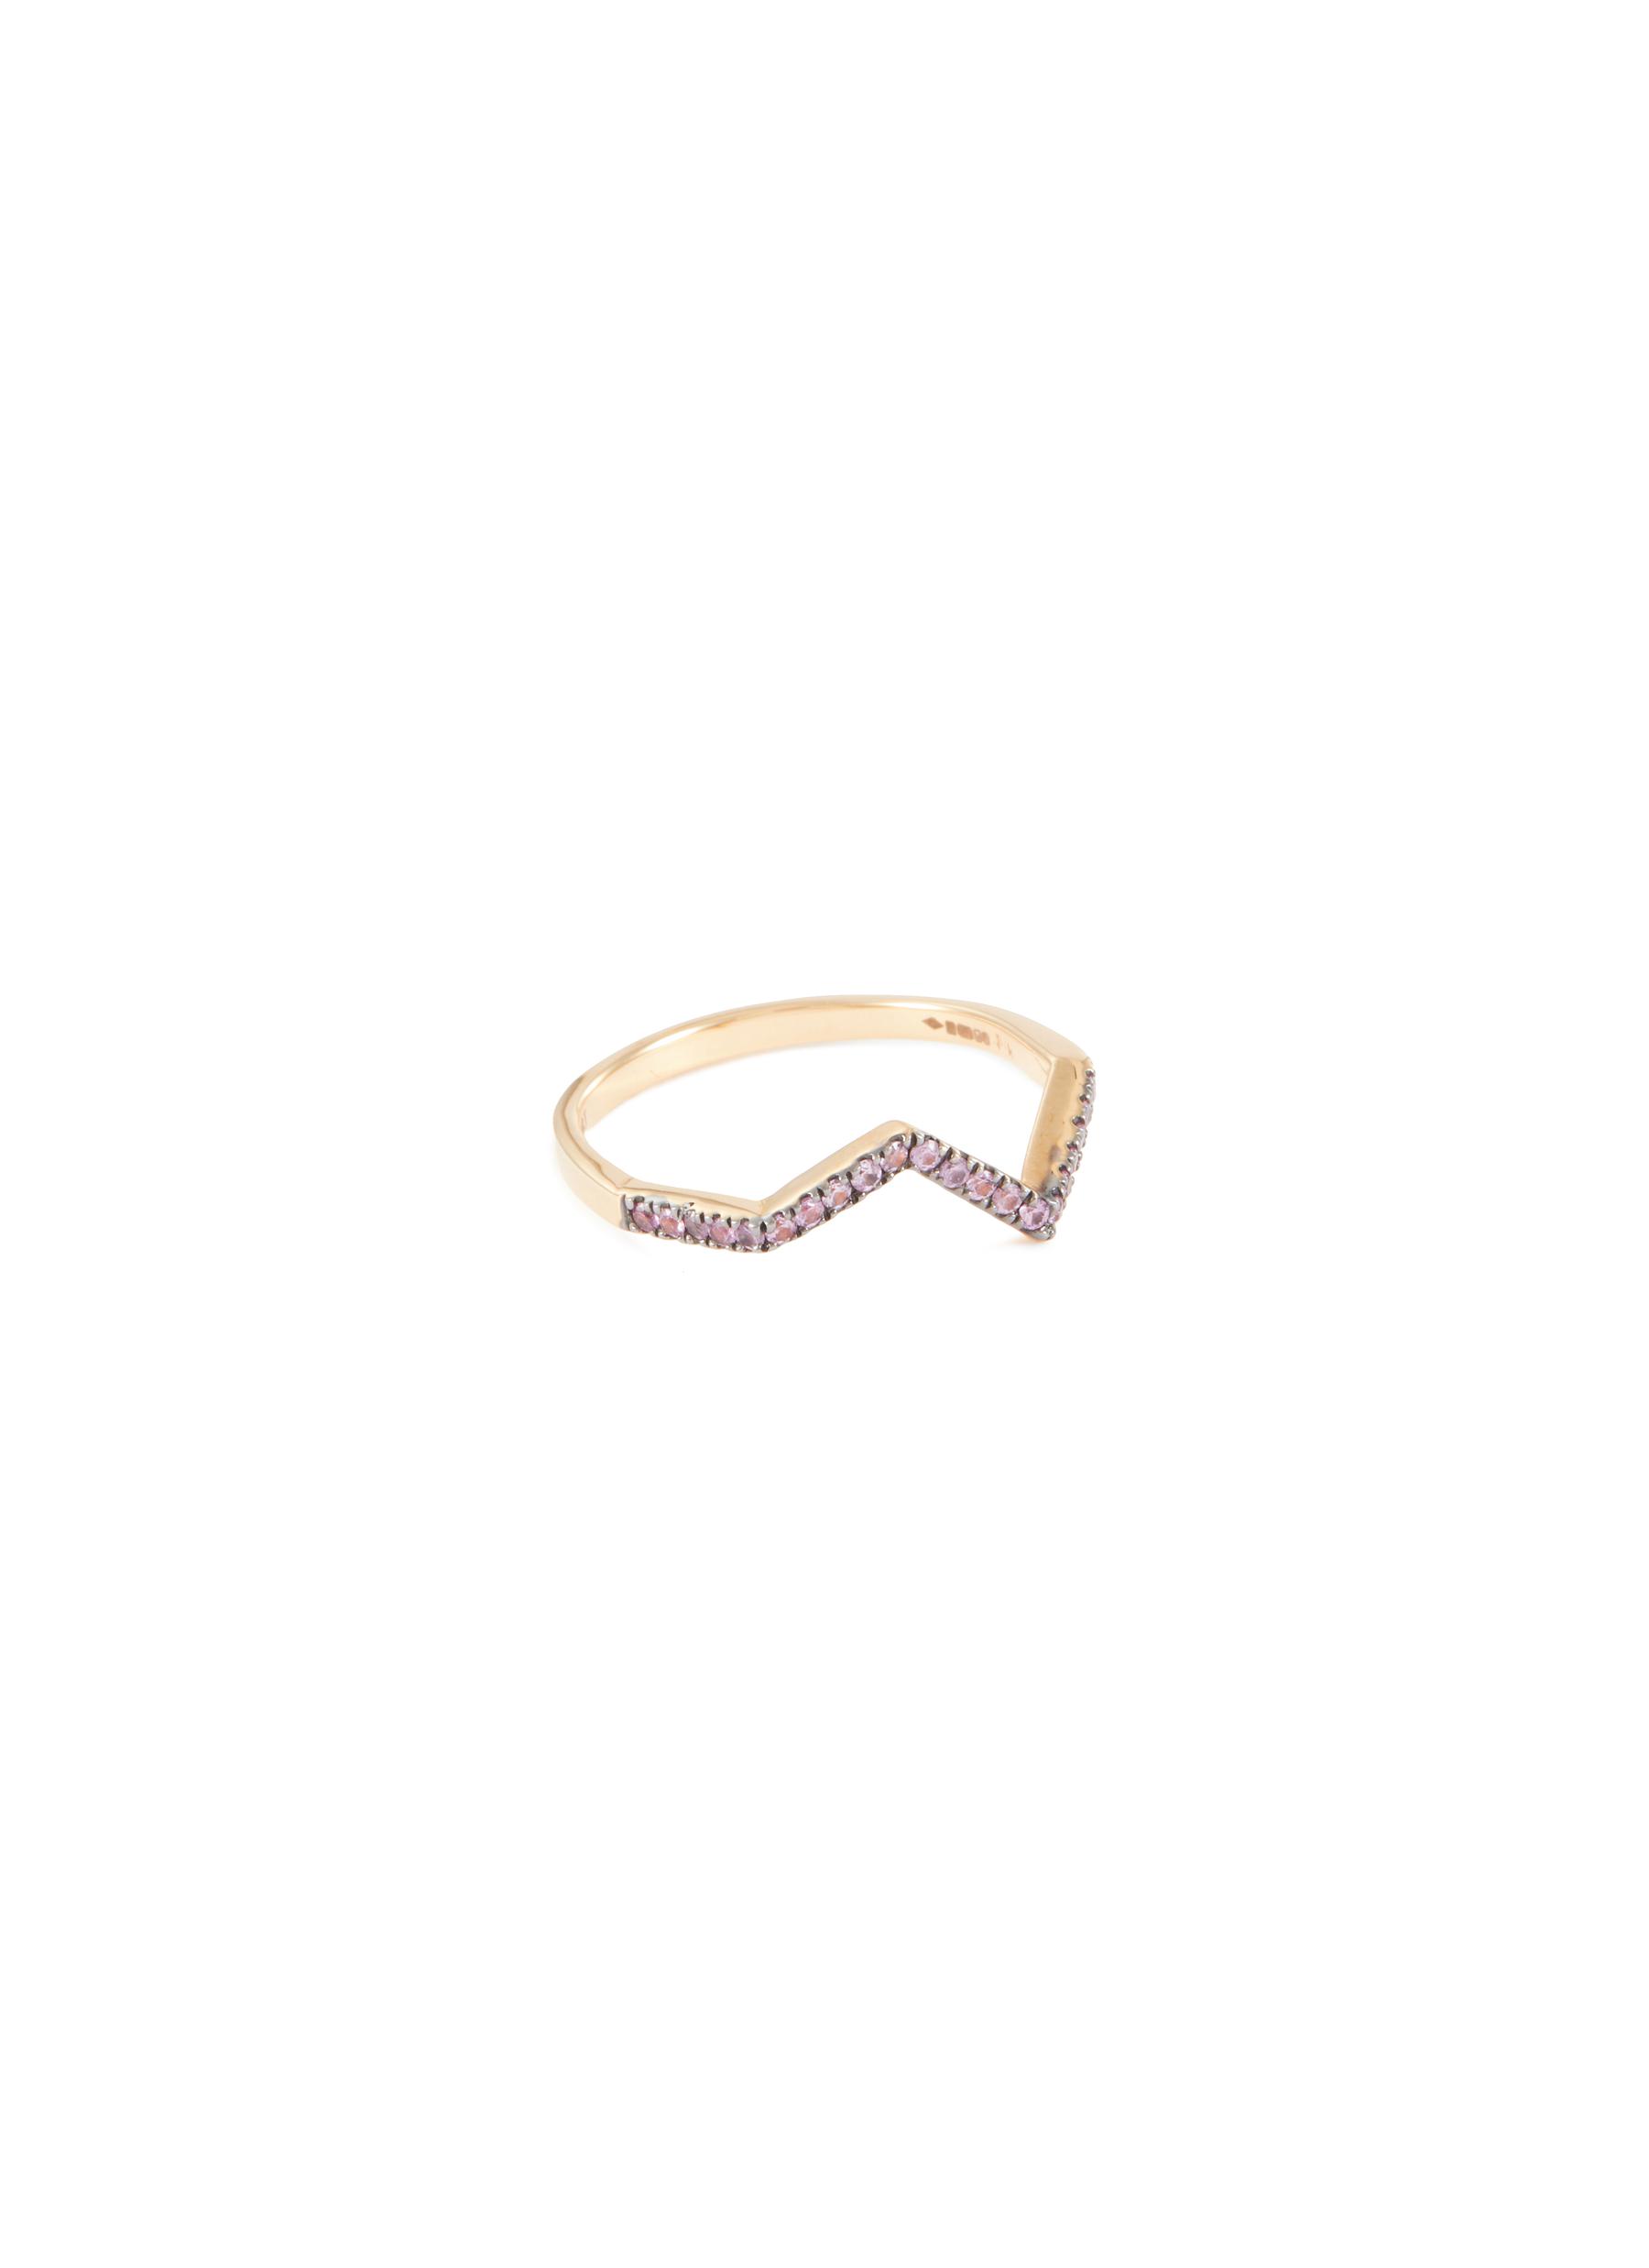 KAVANT & SHARART ‘Origami Ziggy' Micro Pink Sapphire 18K Rose Gold Ring